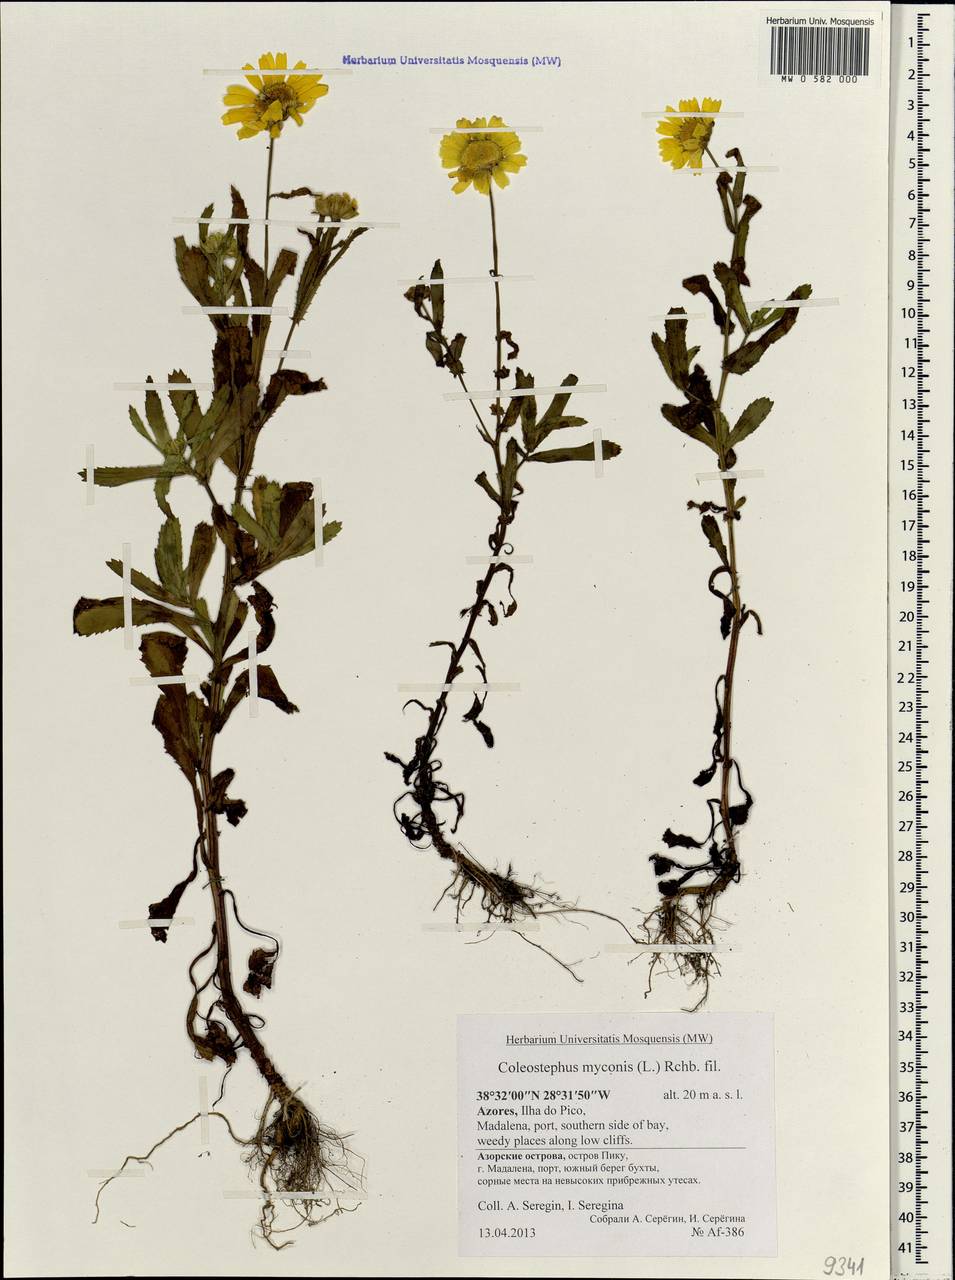 Coleostephus myconis (L.) Rchb.f., Africa (AFR) (Portugal)